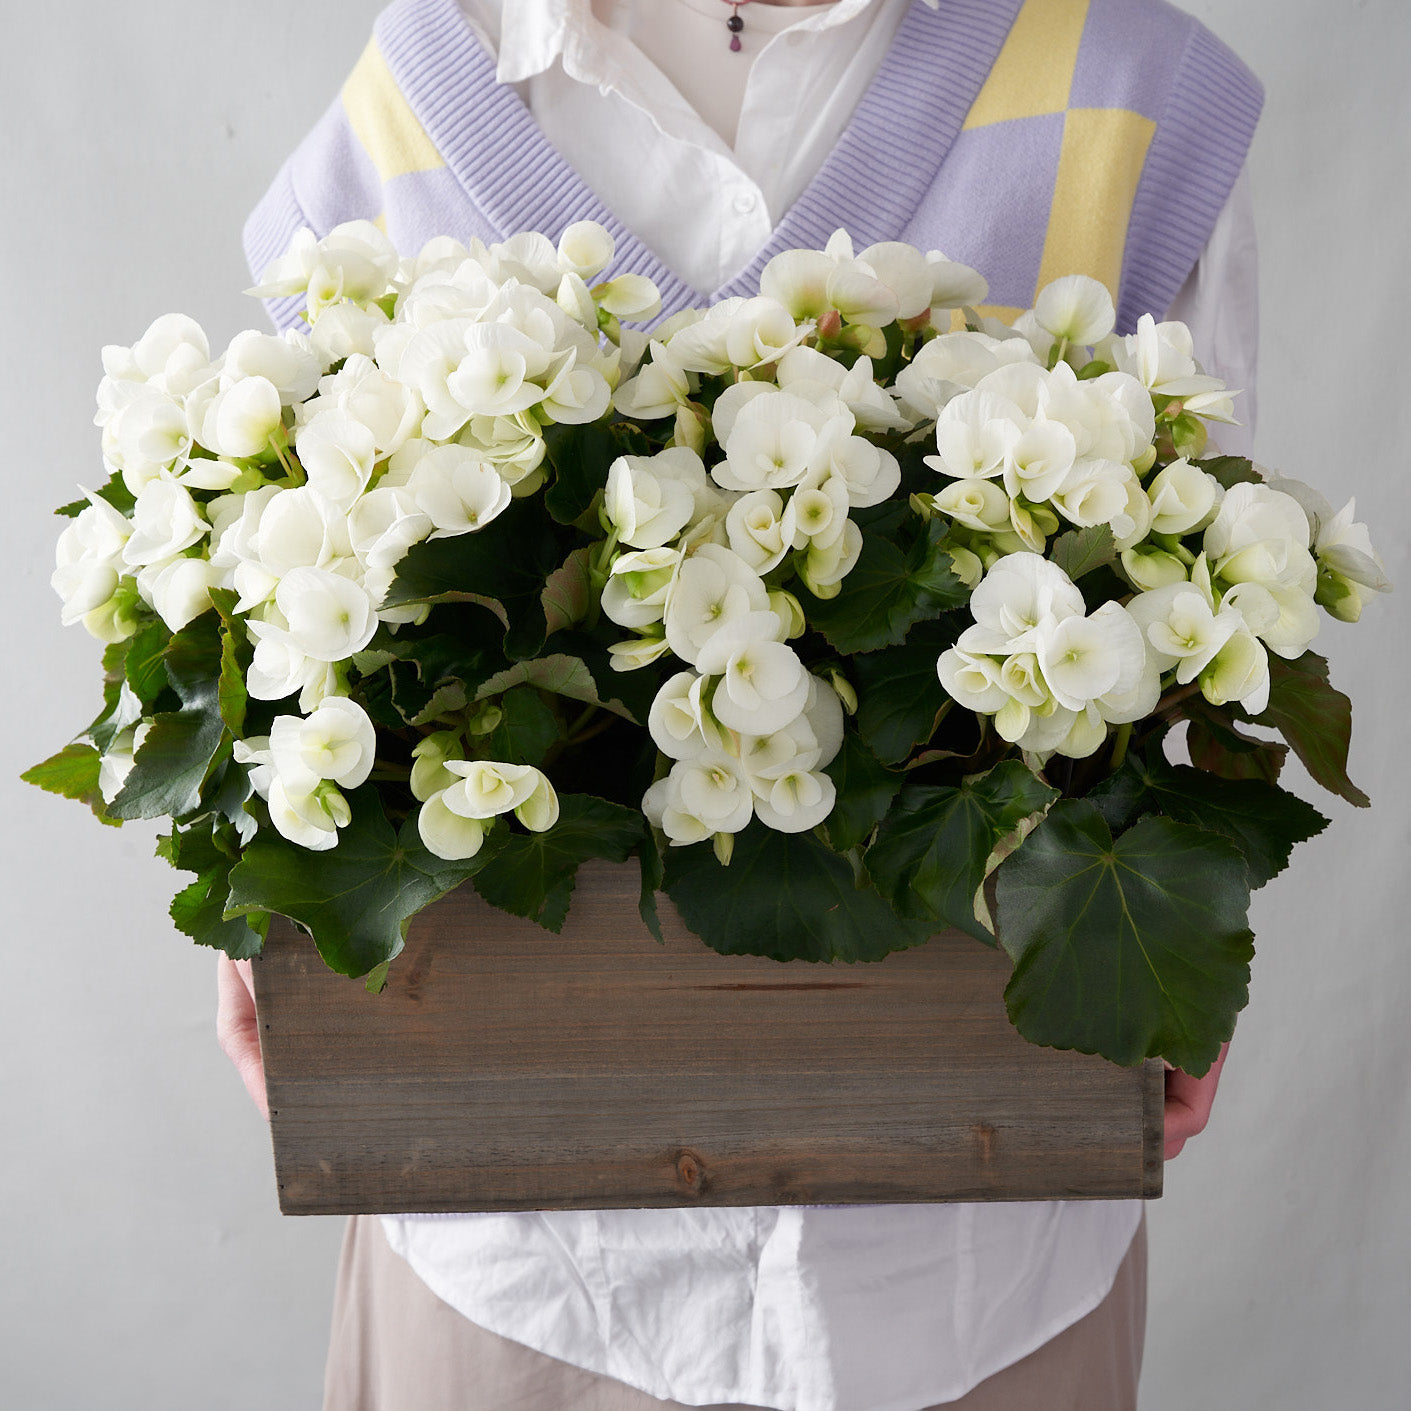 White Begonia in Wooden Box